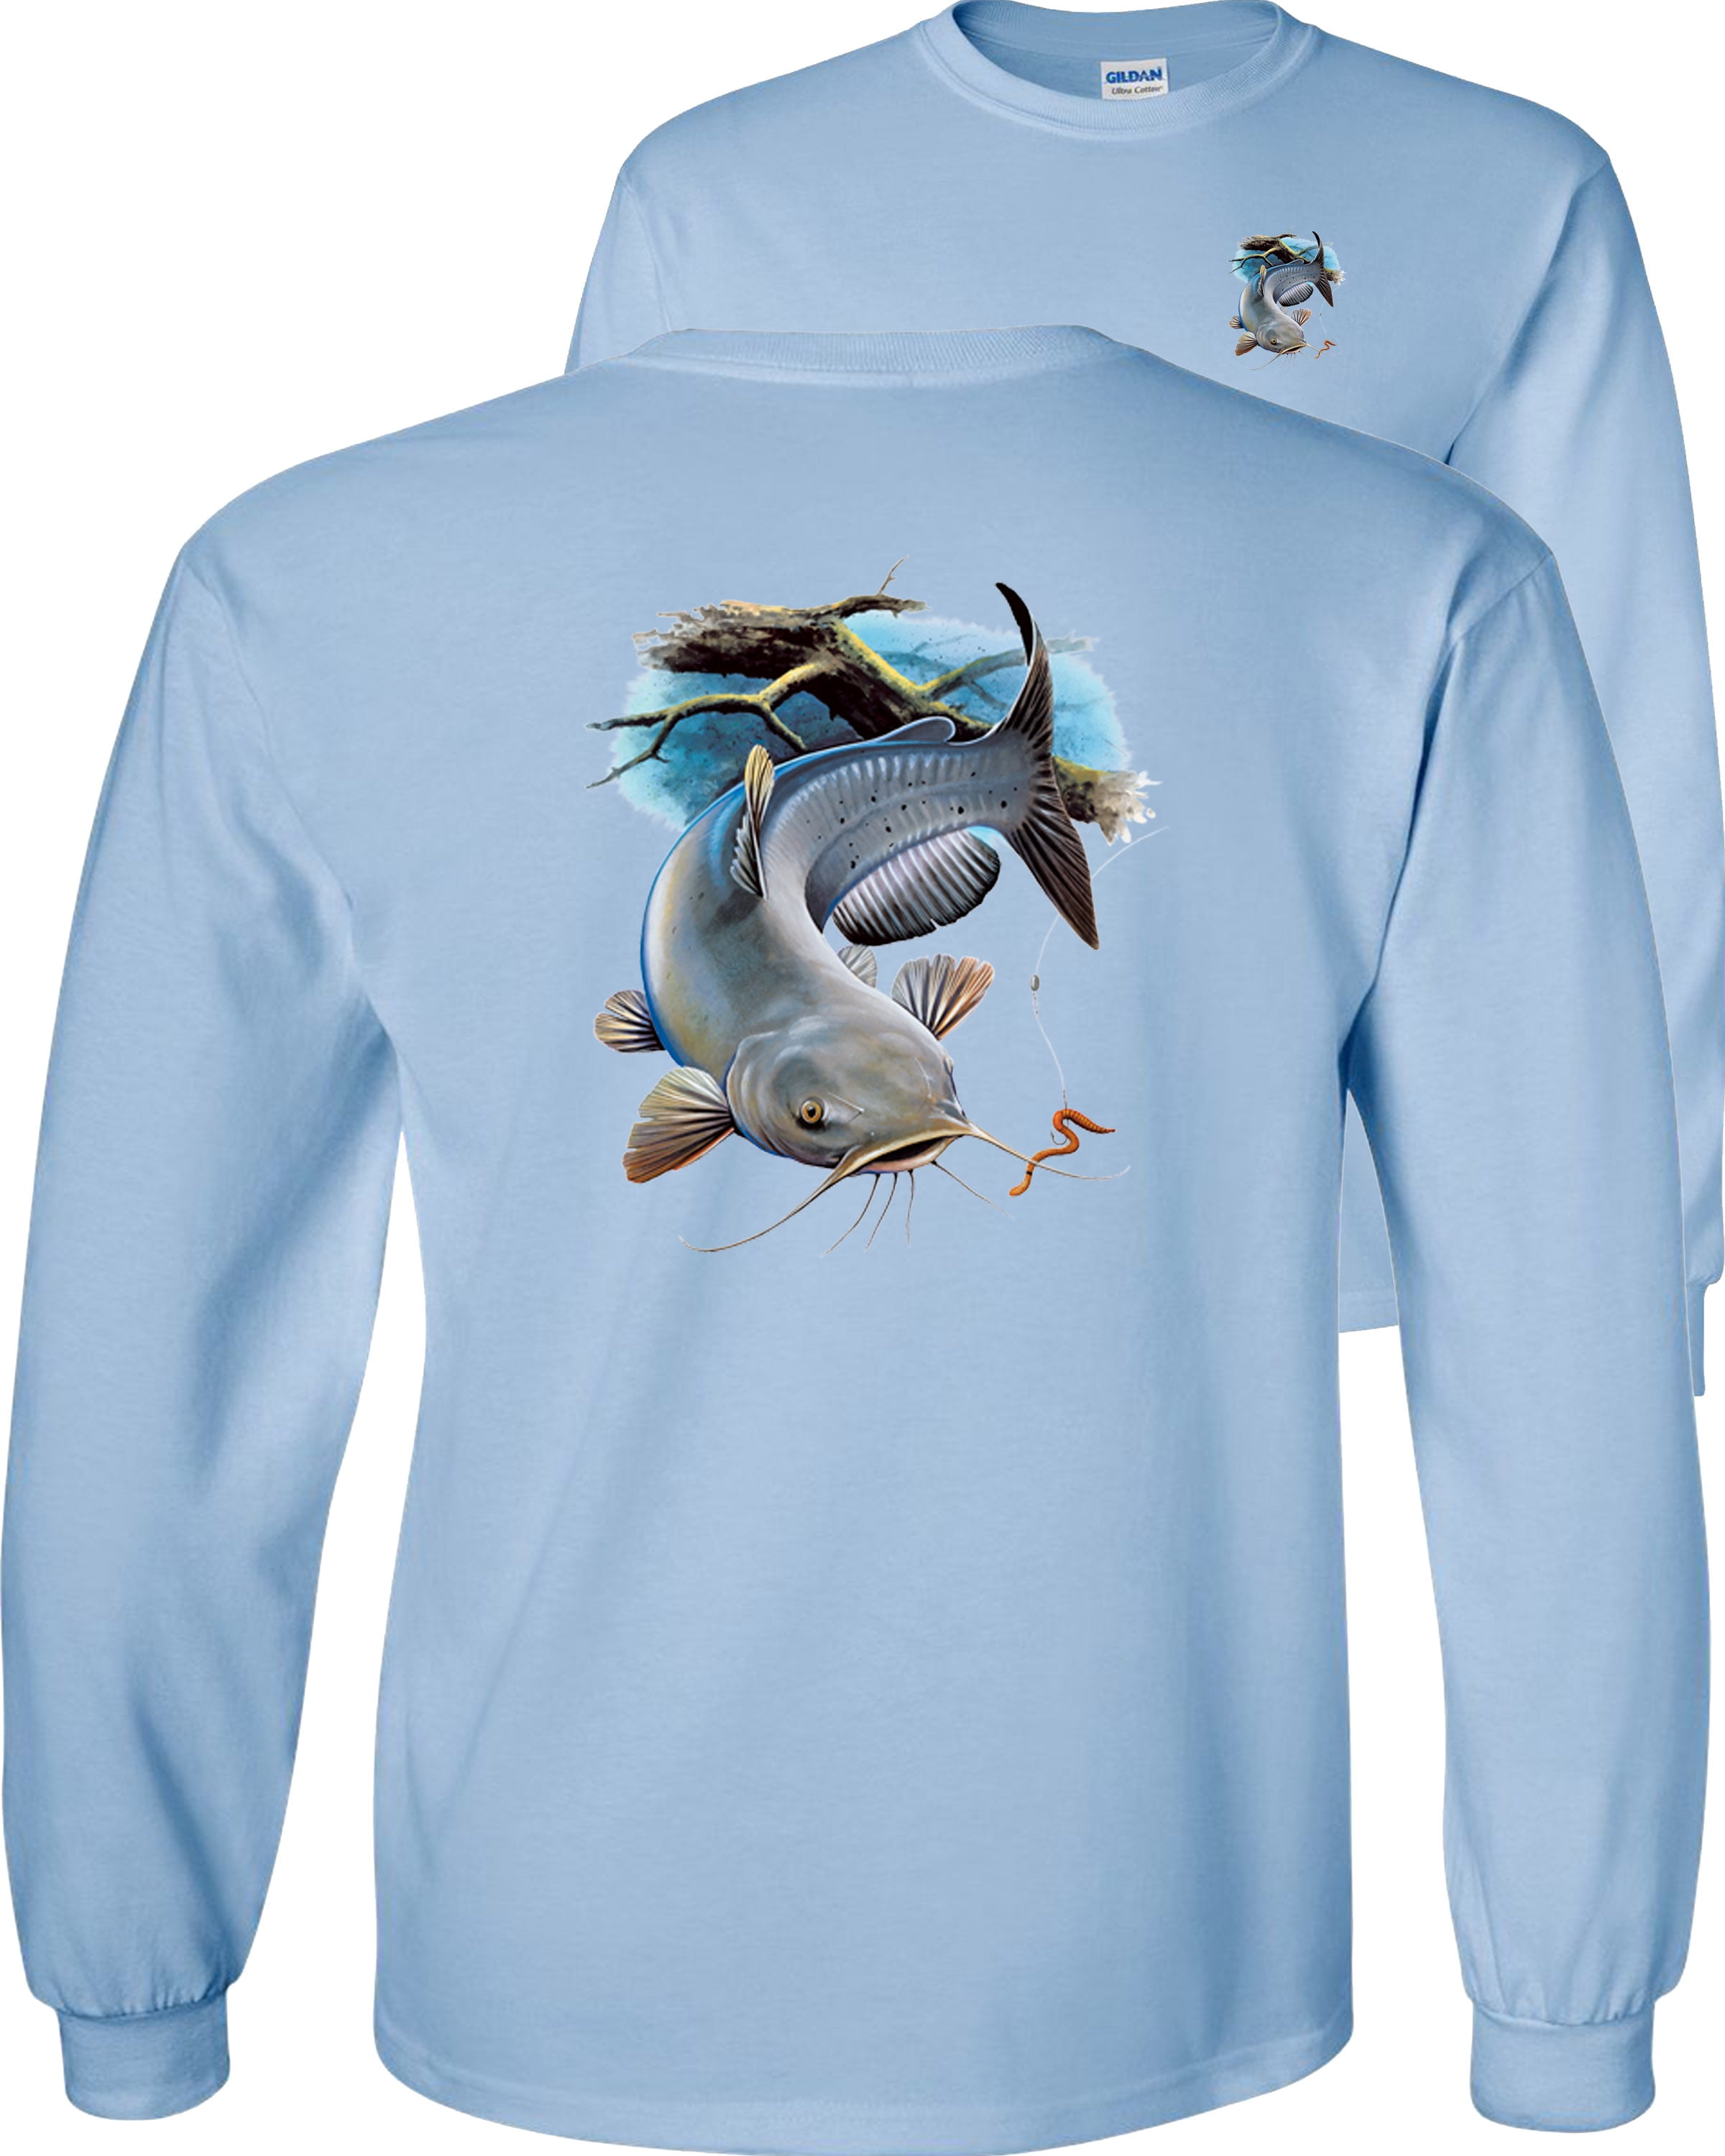 Fair Game Catfish Long Sleeve Shirt, River Blue Channel, Fishing